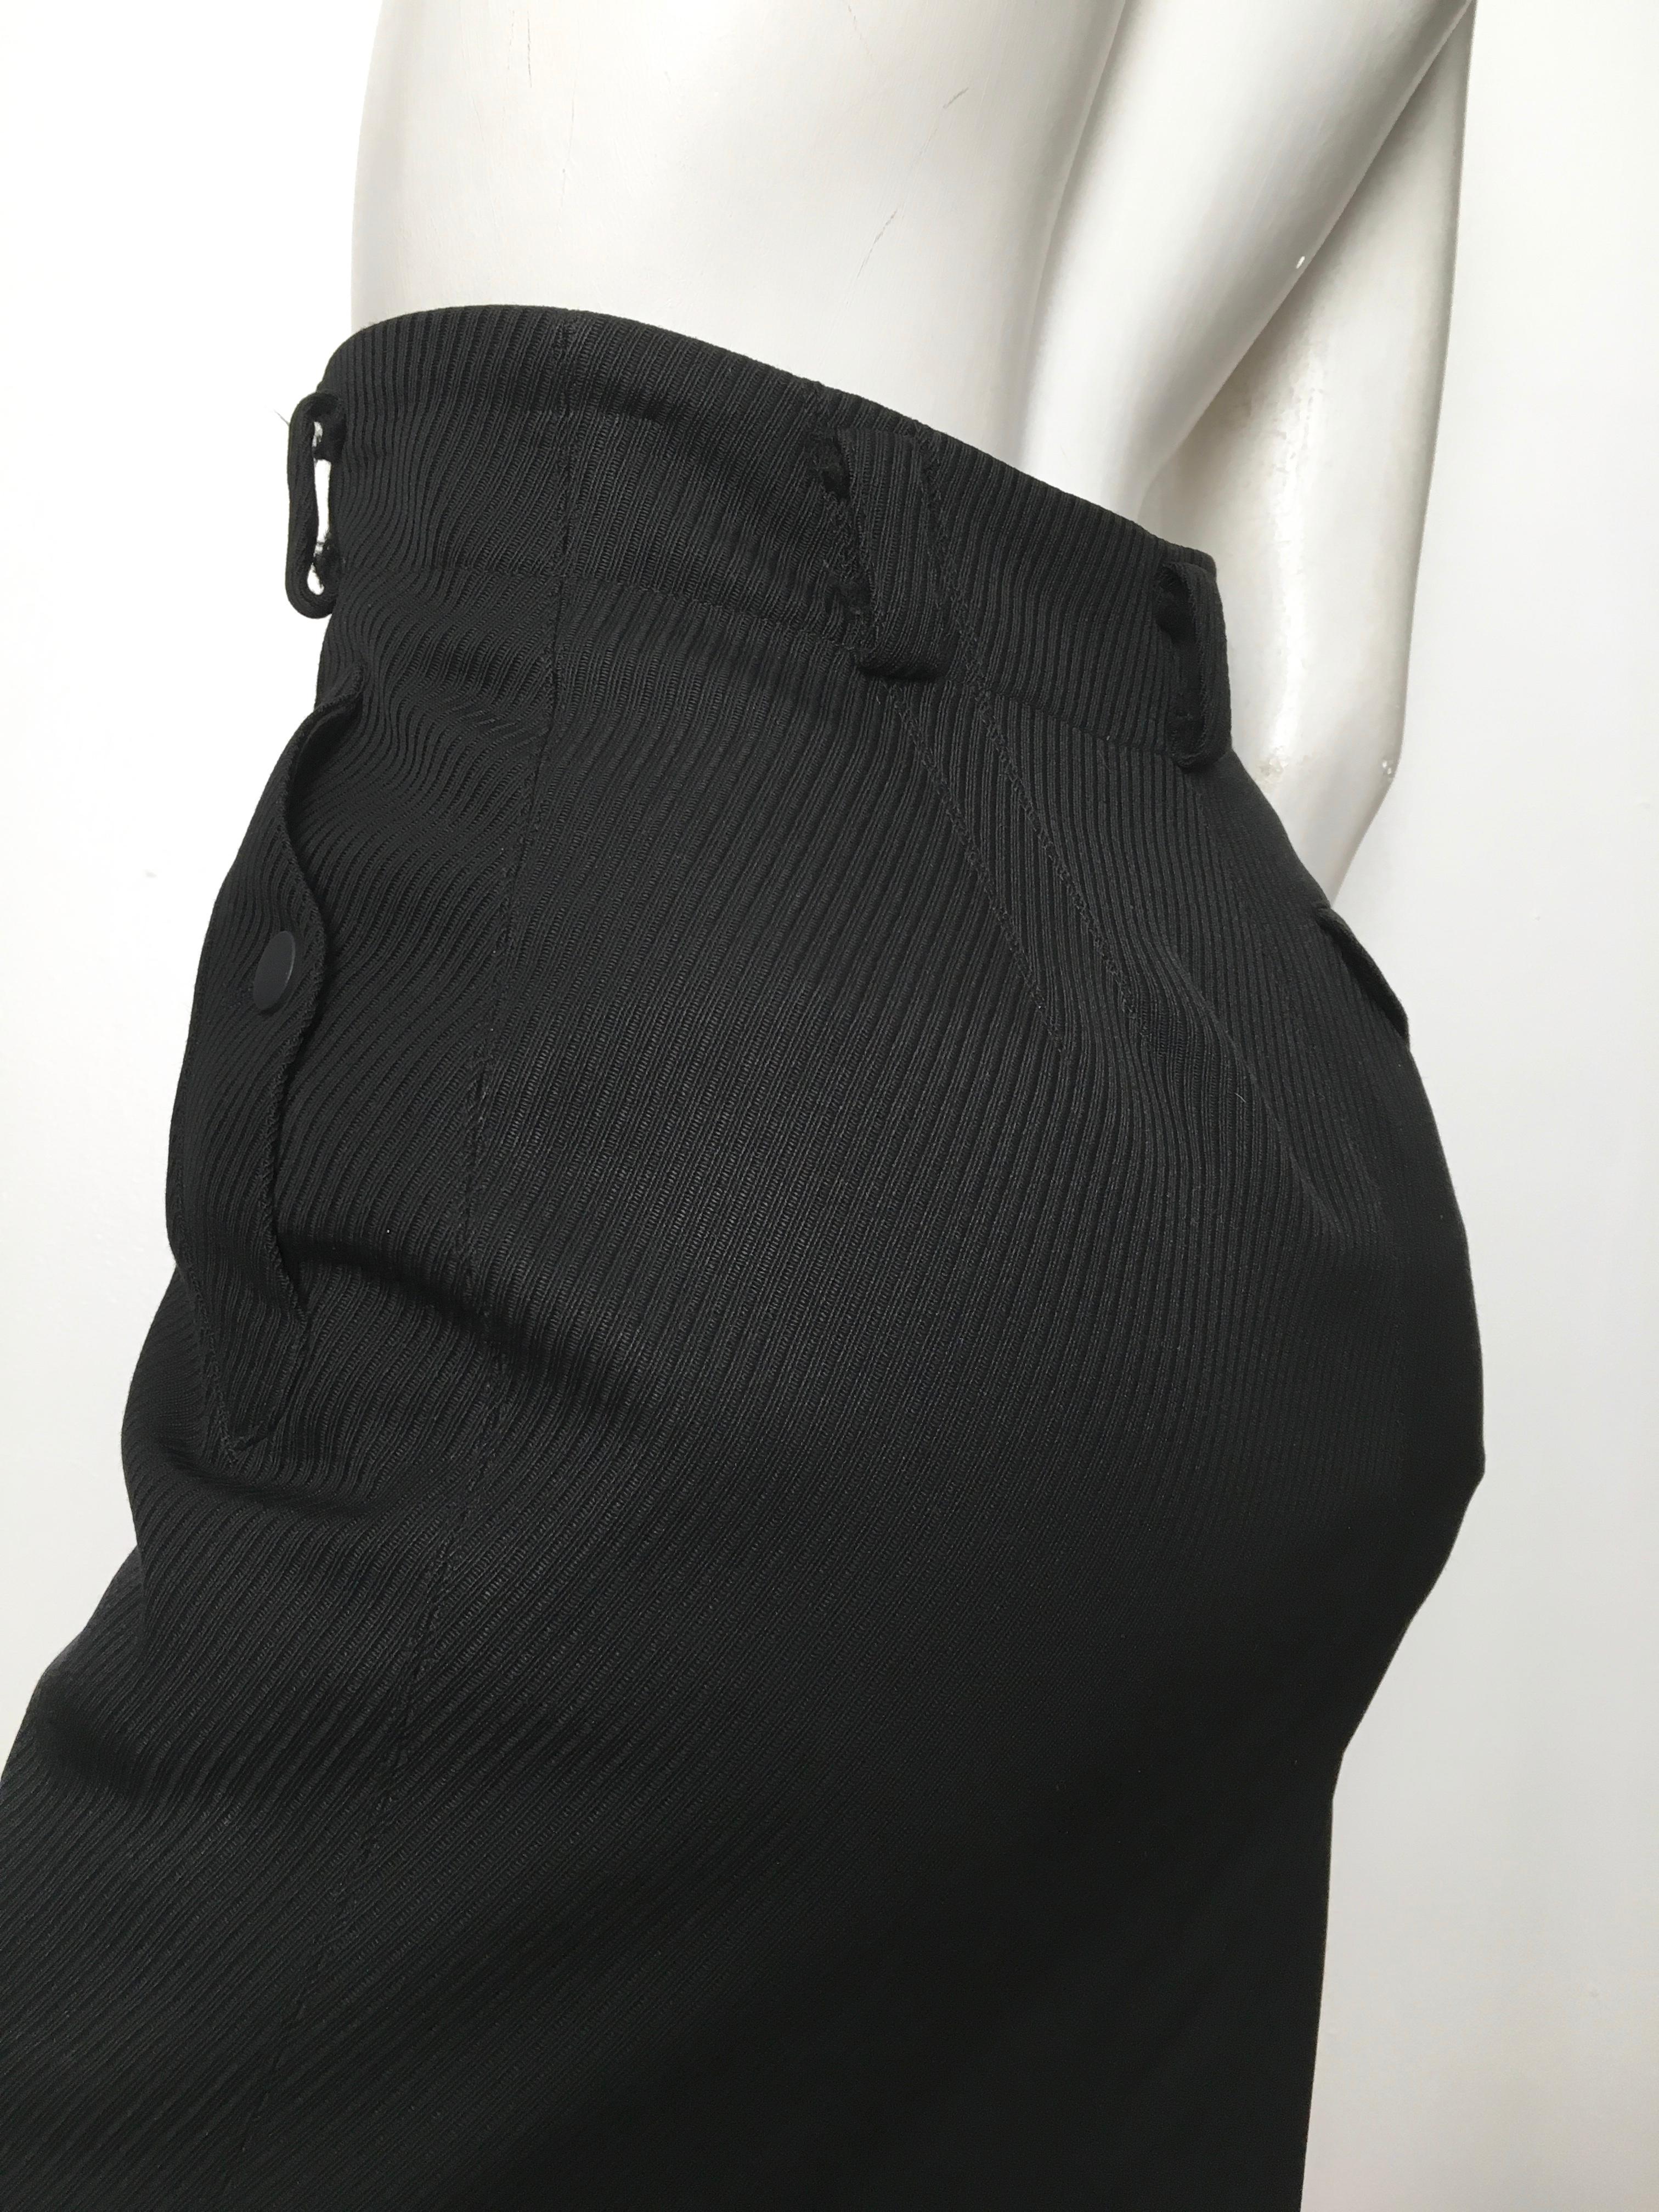 Azzedine Alaia 1980s Black Pencil Skirt with Pockets Size 4. 5